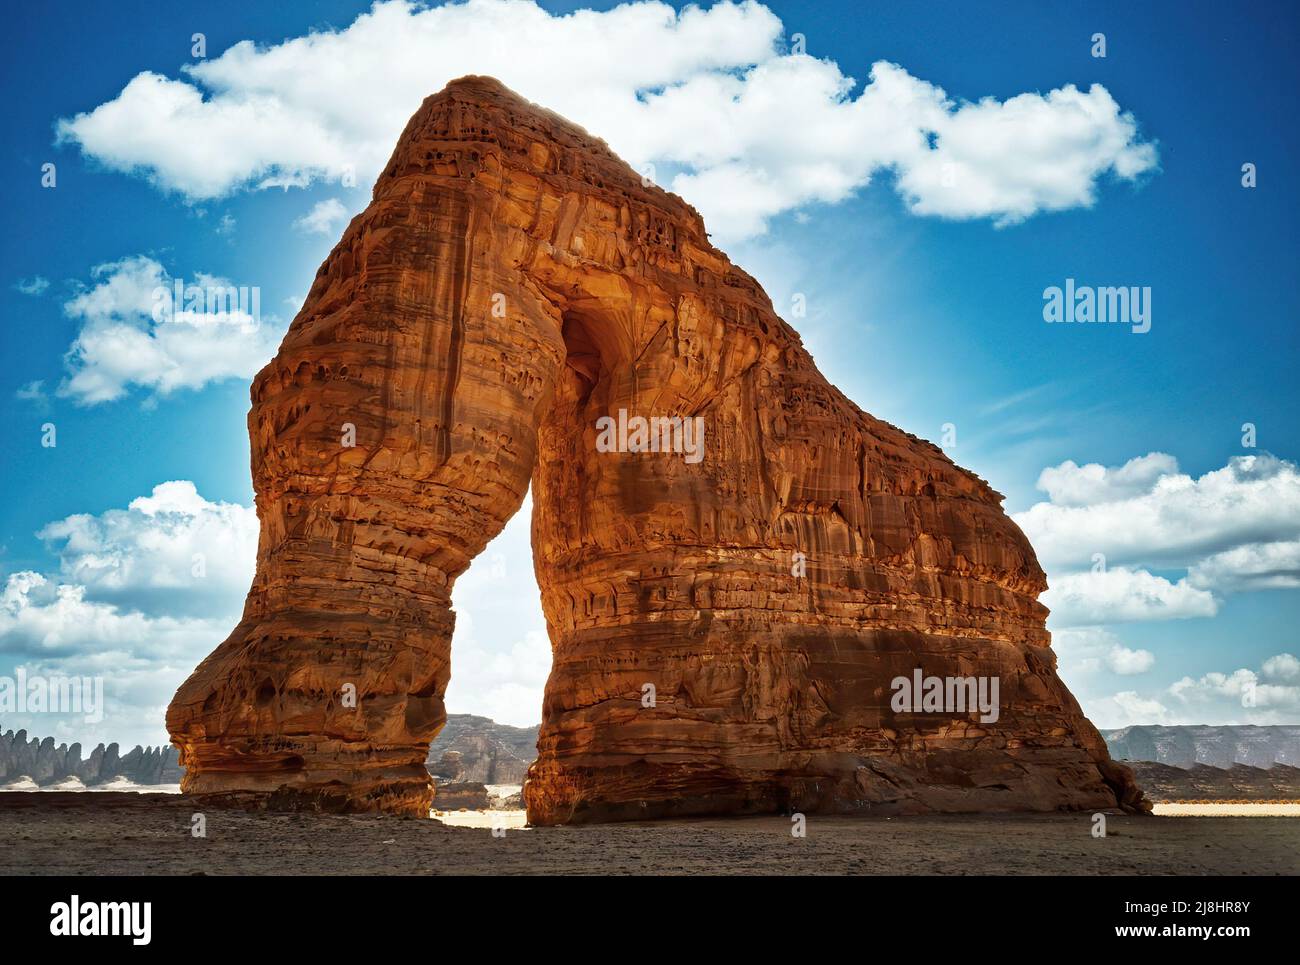 Famous Elephant rock in Al-Ula, Saudi Arabia. Stock Photo